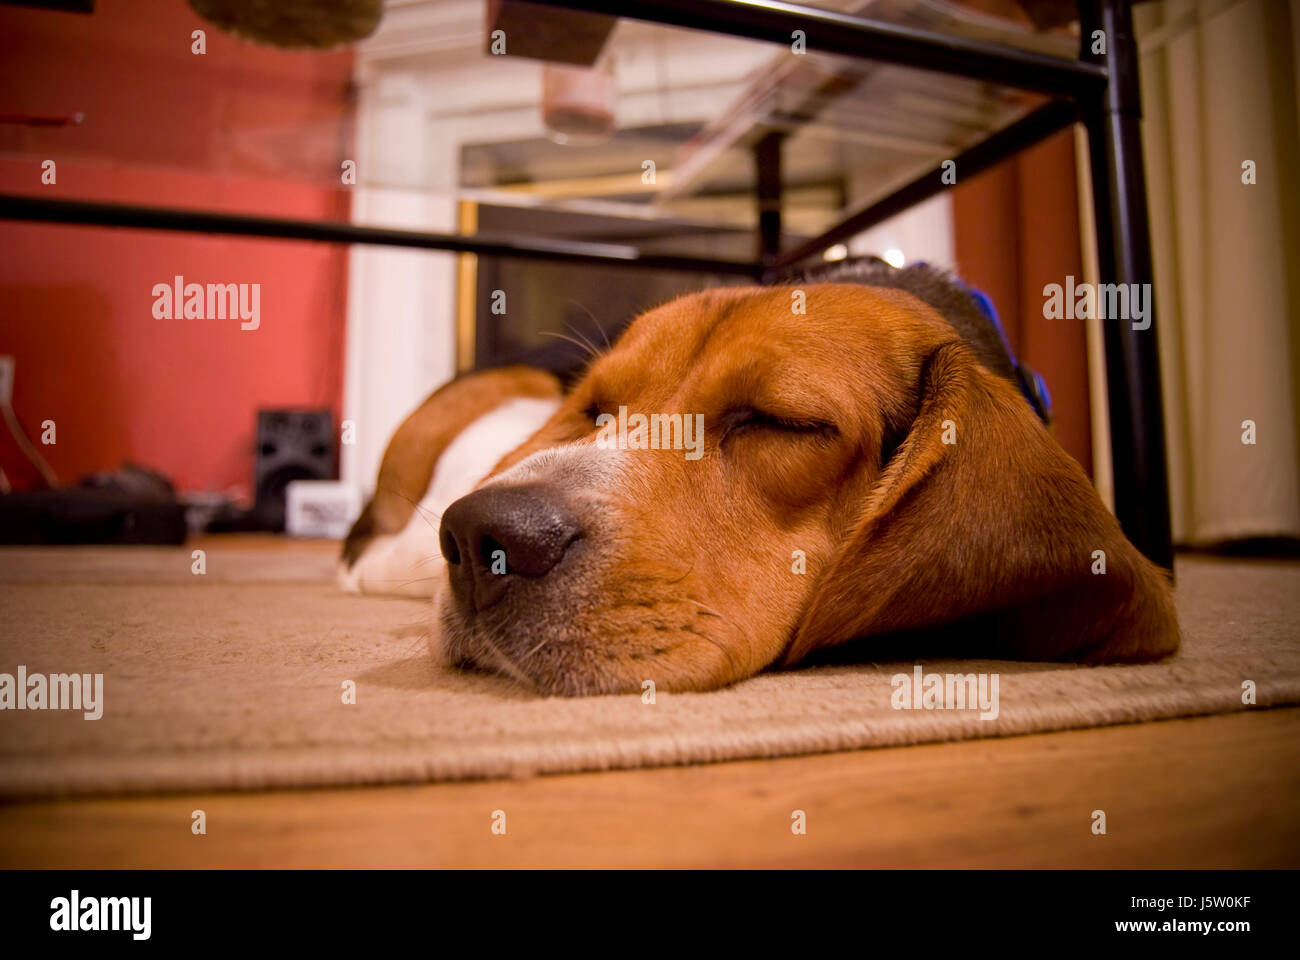 brown brownish brunette ears dog homey domestic canine companion beagle Stock Photo